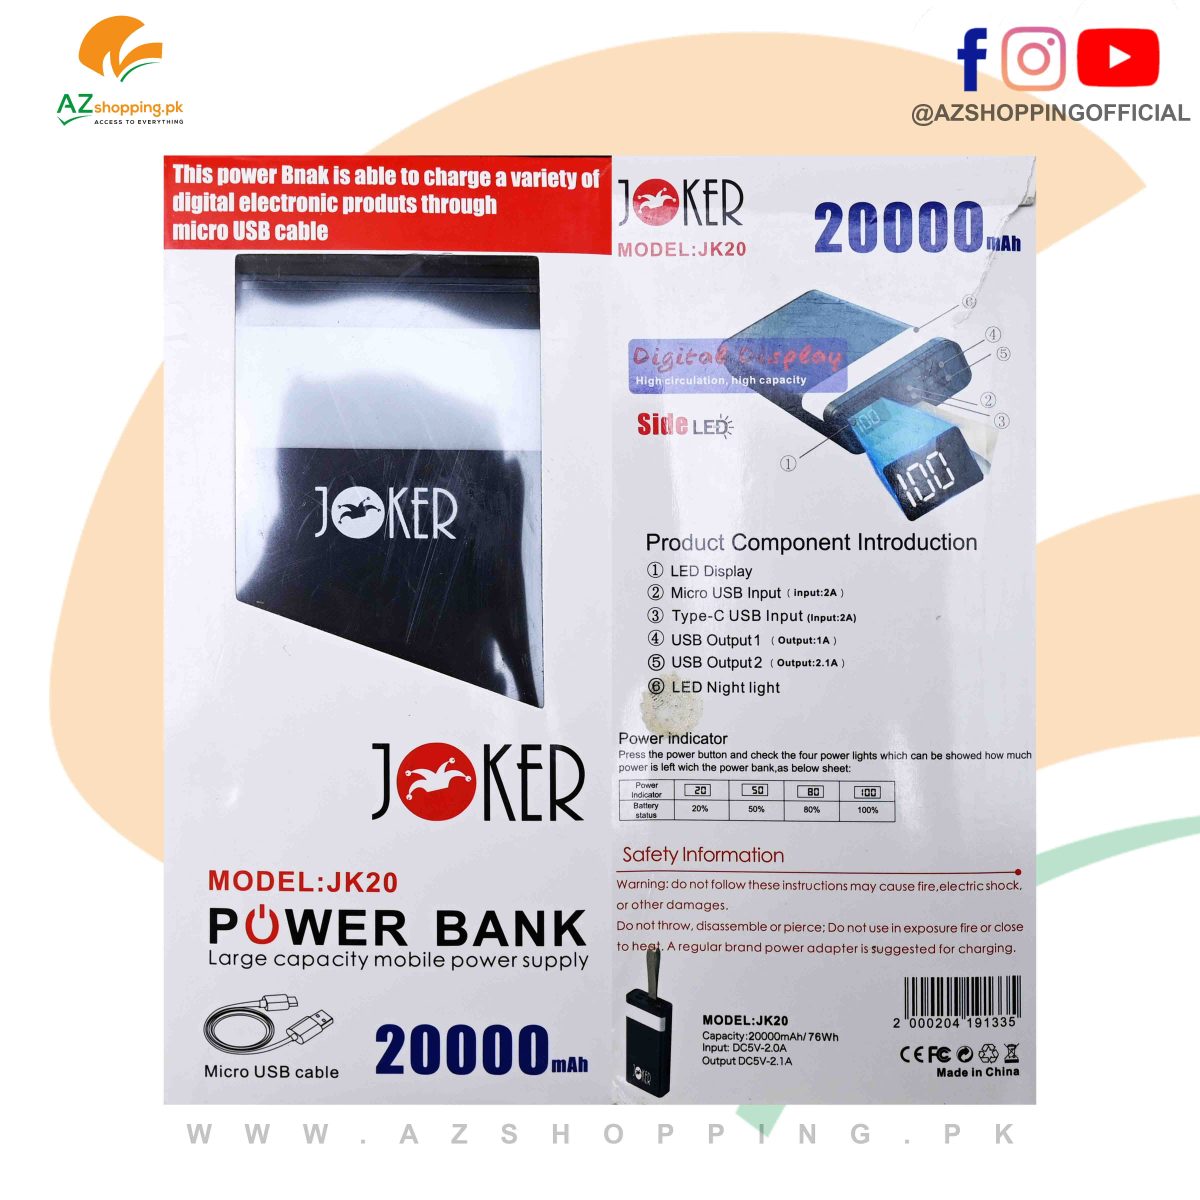 Joker - Power Bank 20,000mAh with LED Display & LED Night Light – Model: JK20